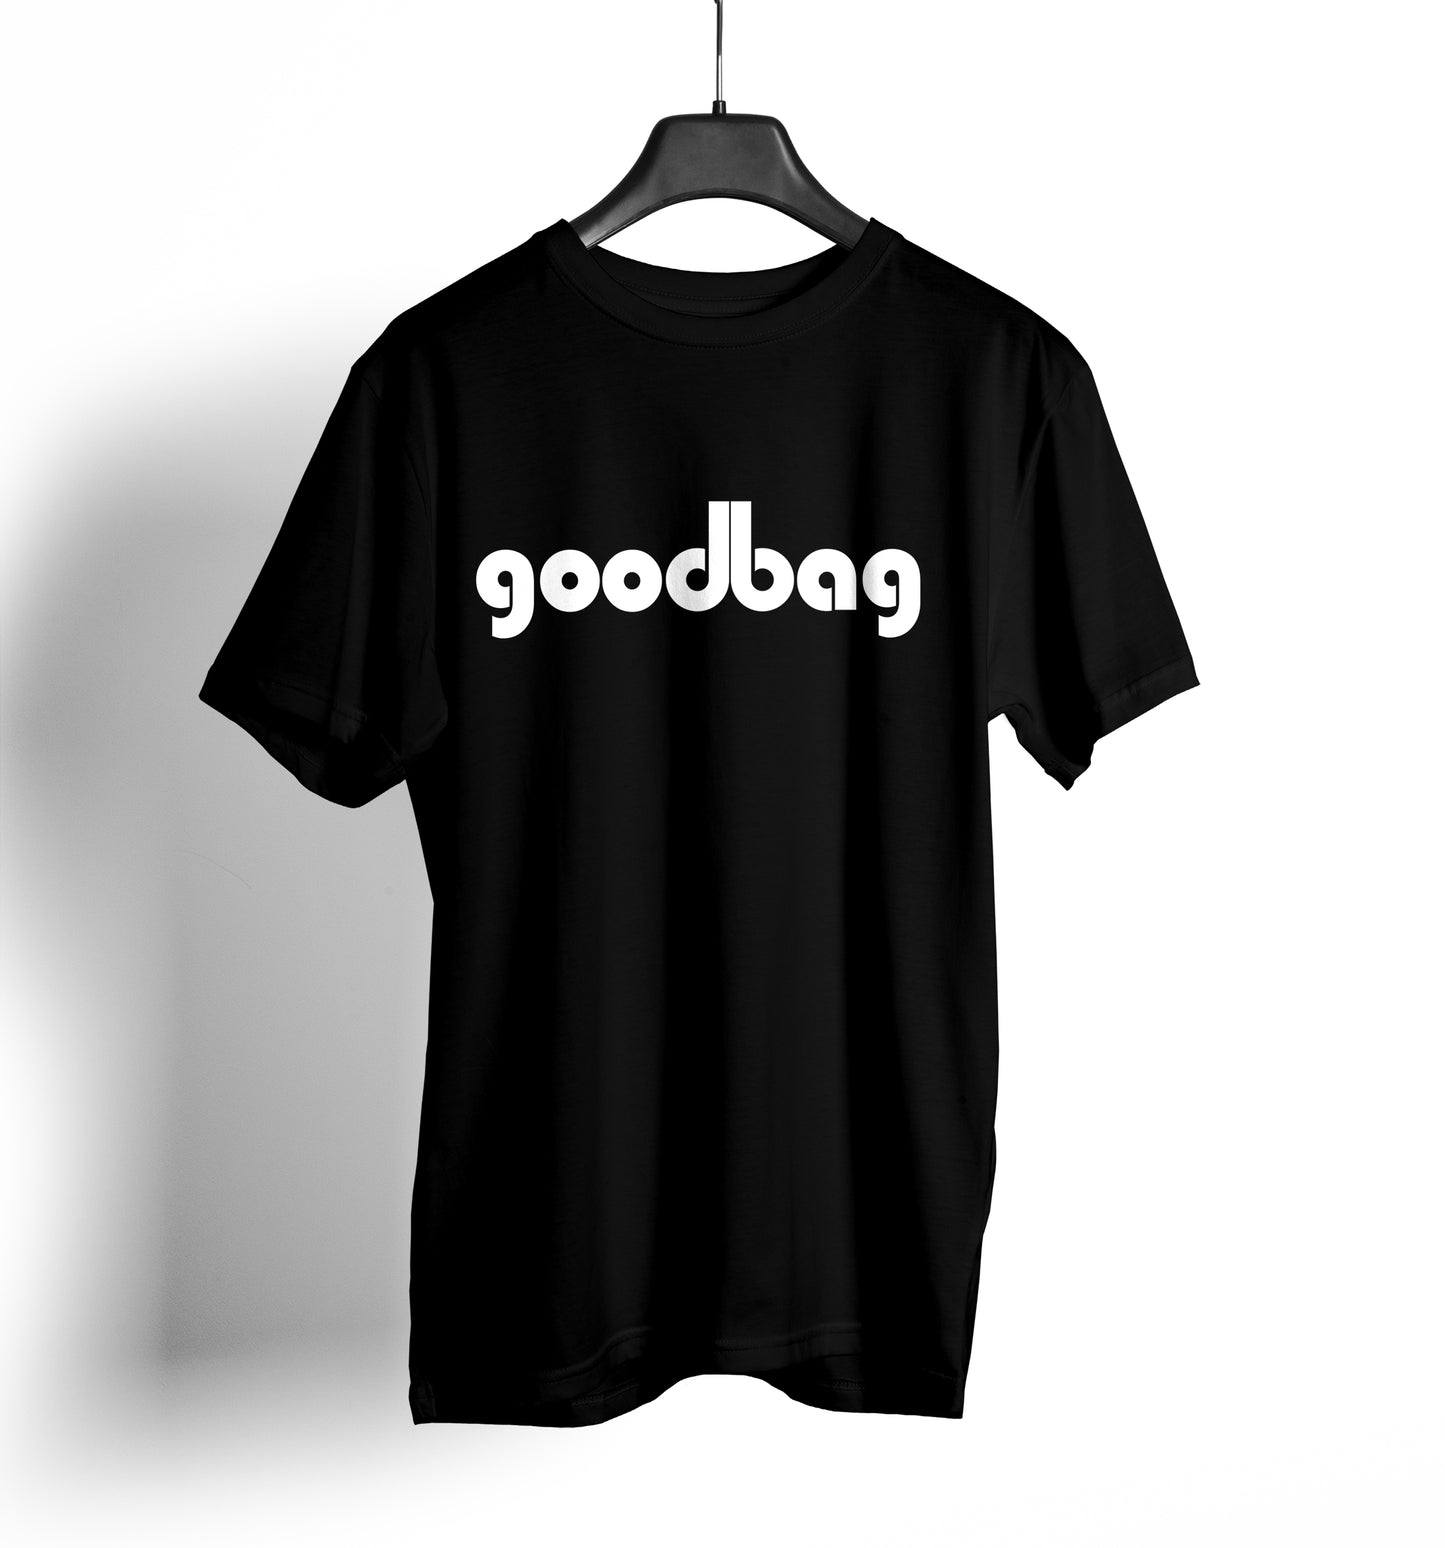 cornhole goodbag db shirt